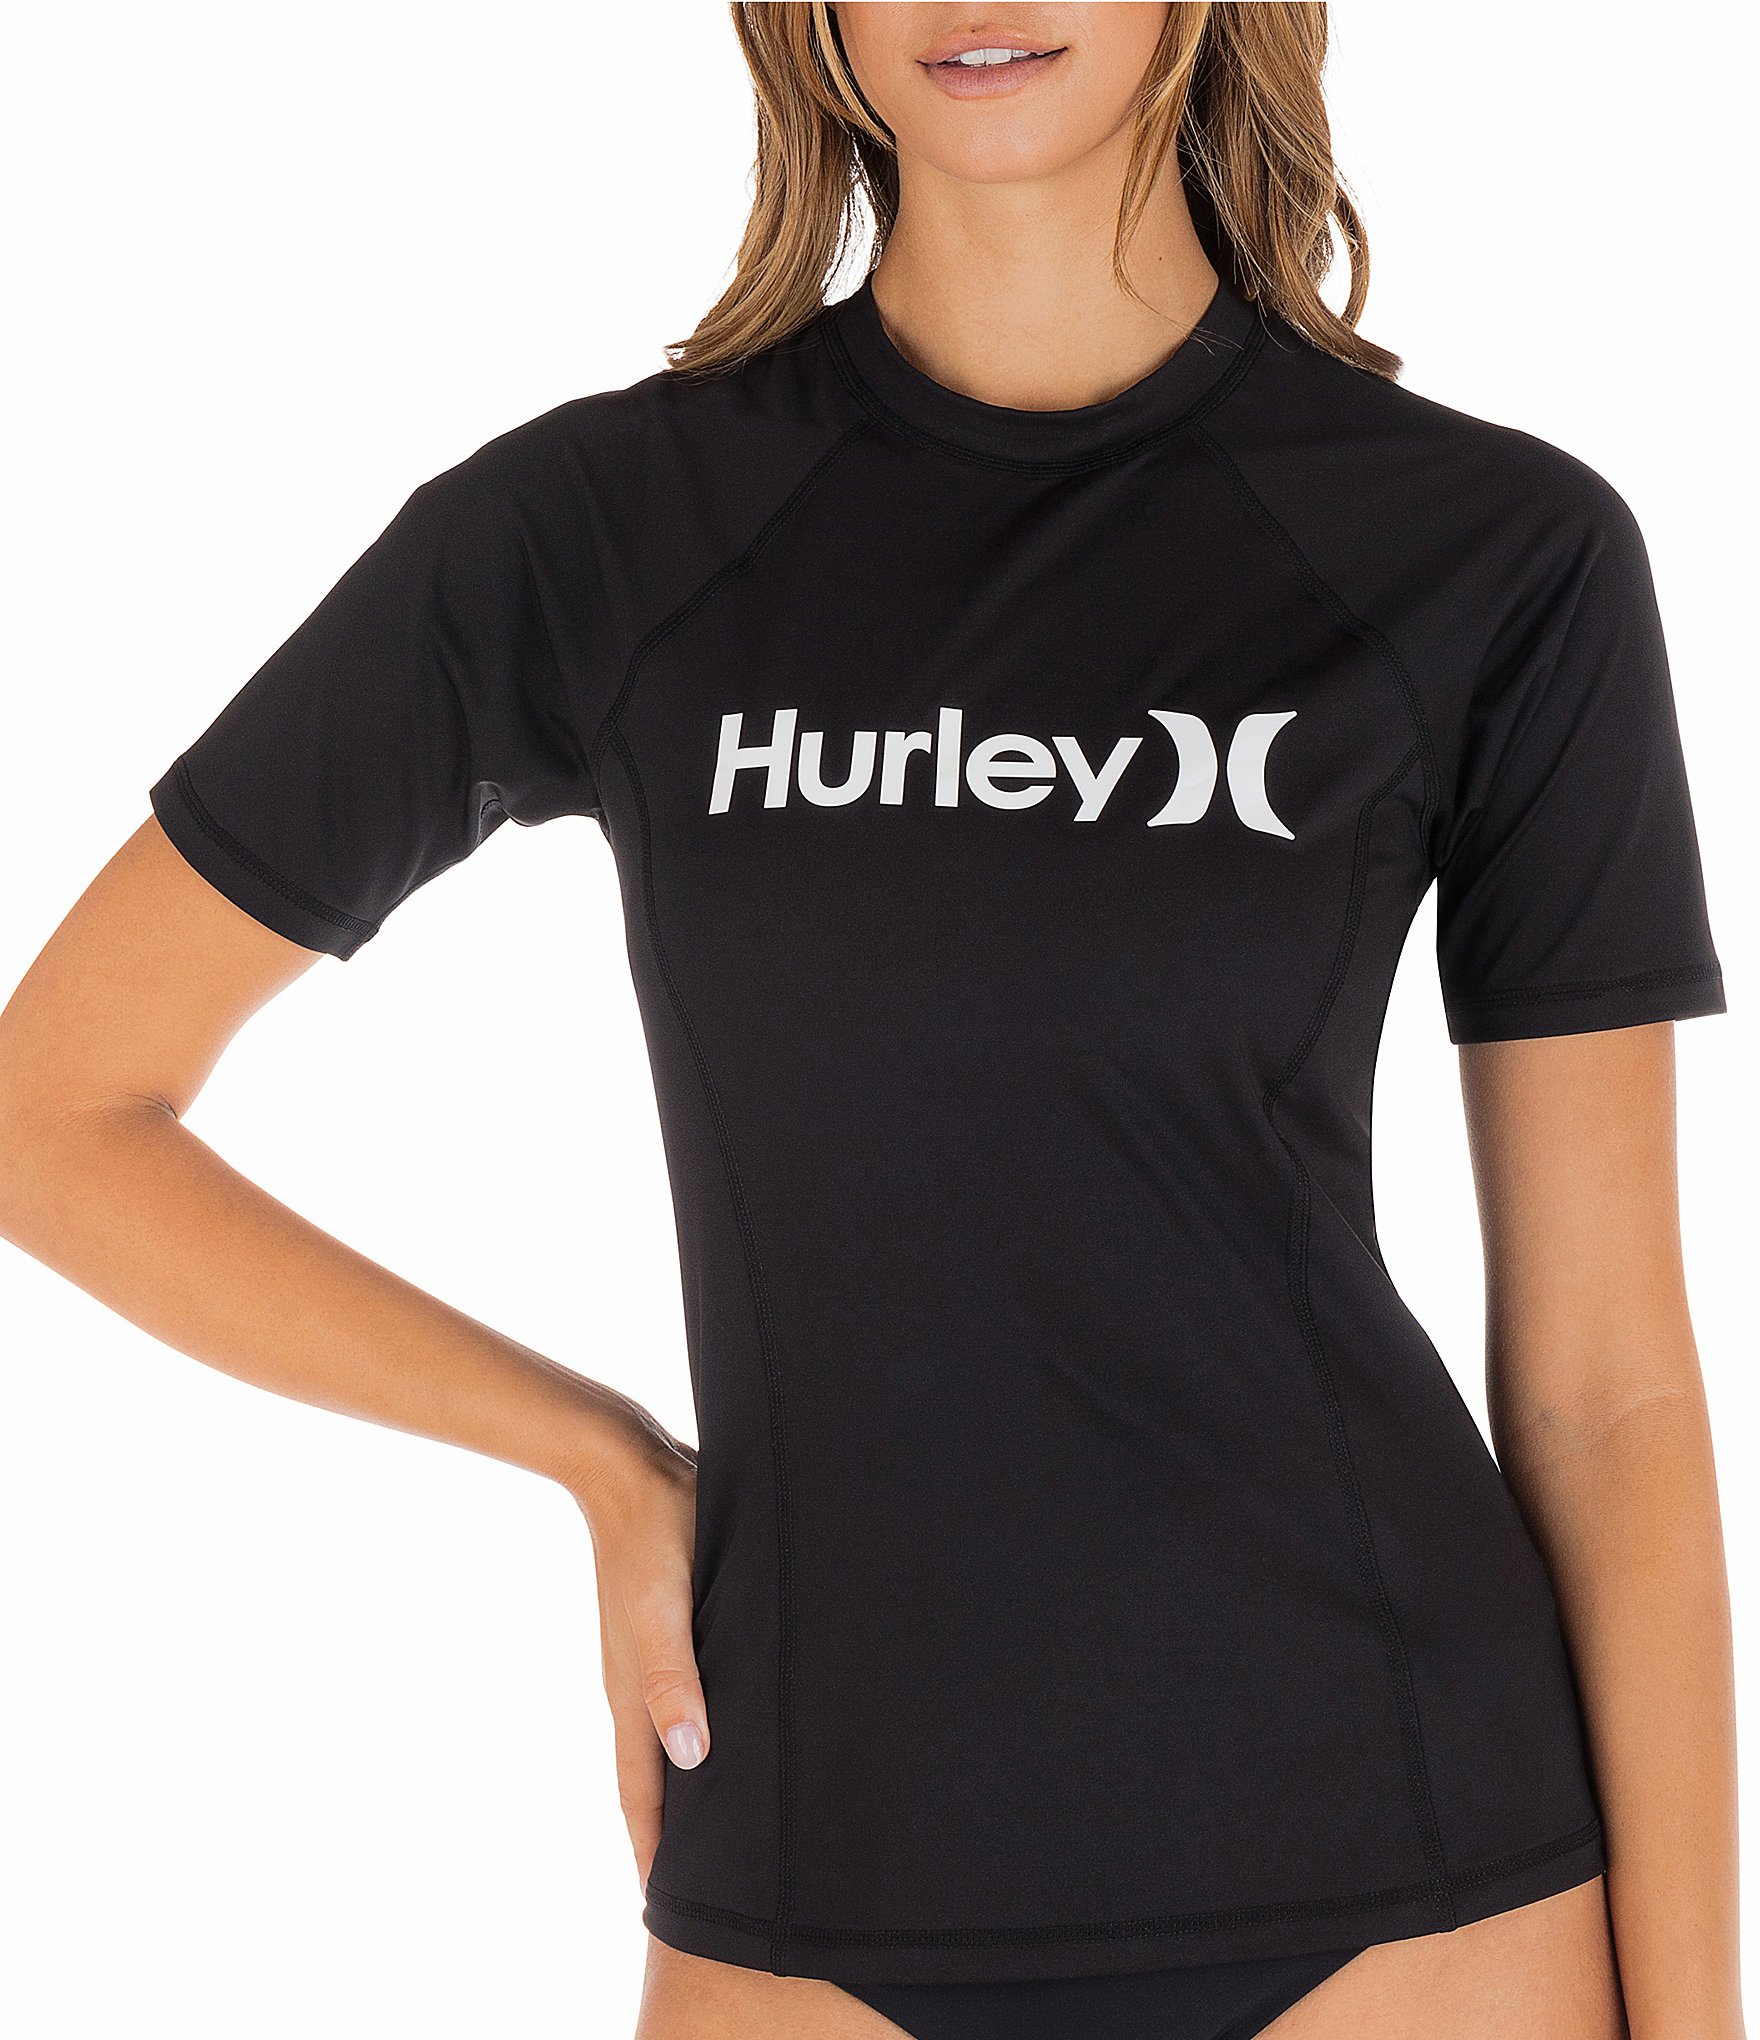 Hurley One and Only Short Sleeve Rashguard Swim Top | Dillard's